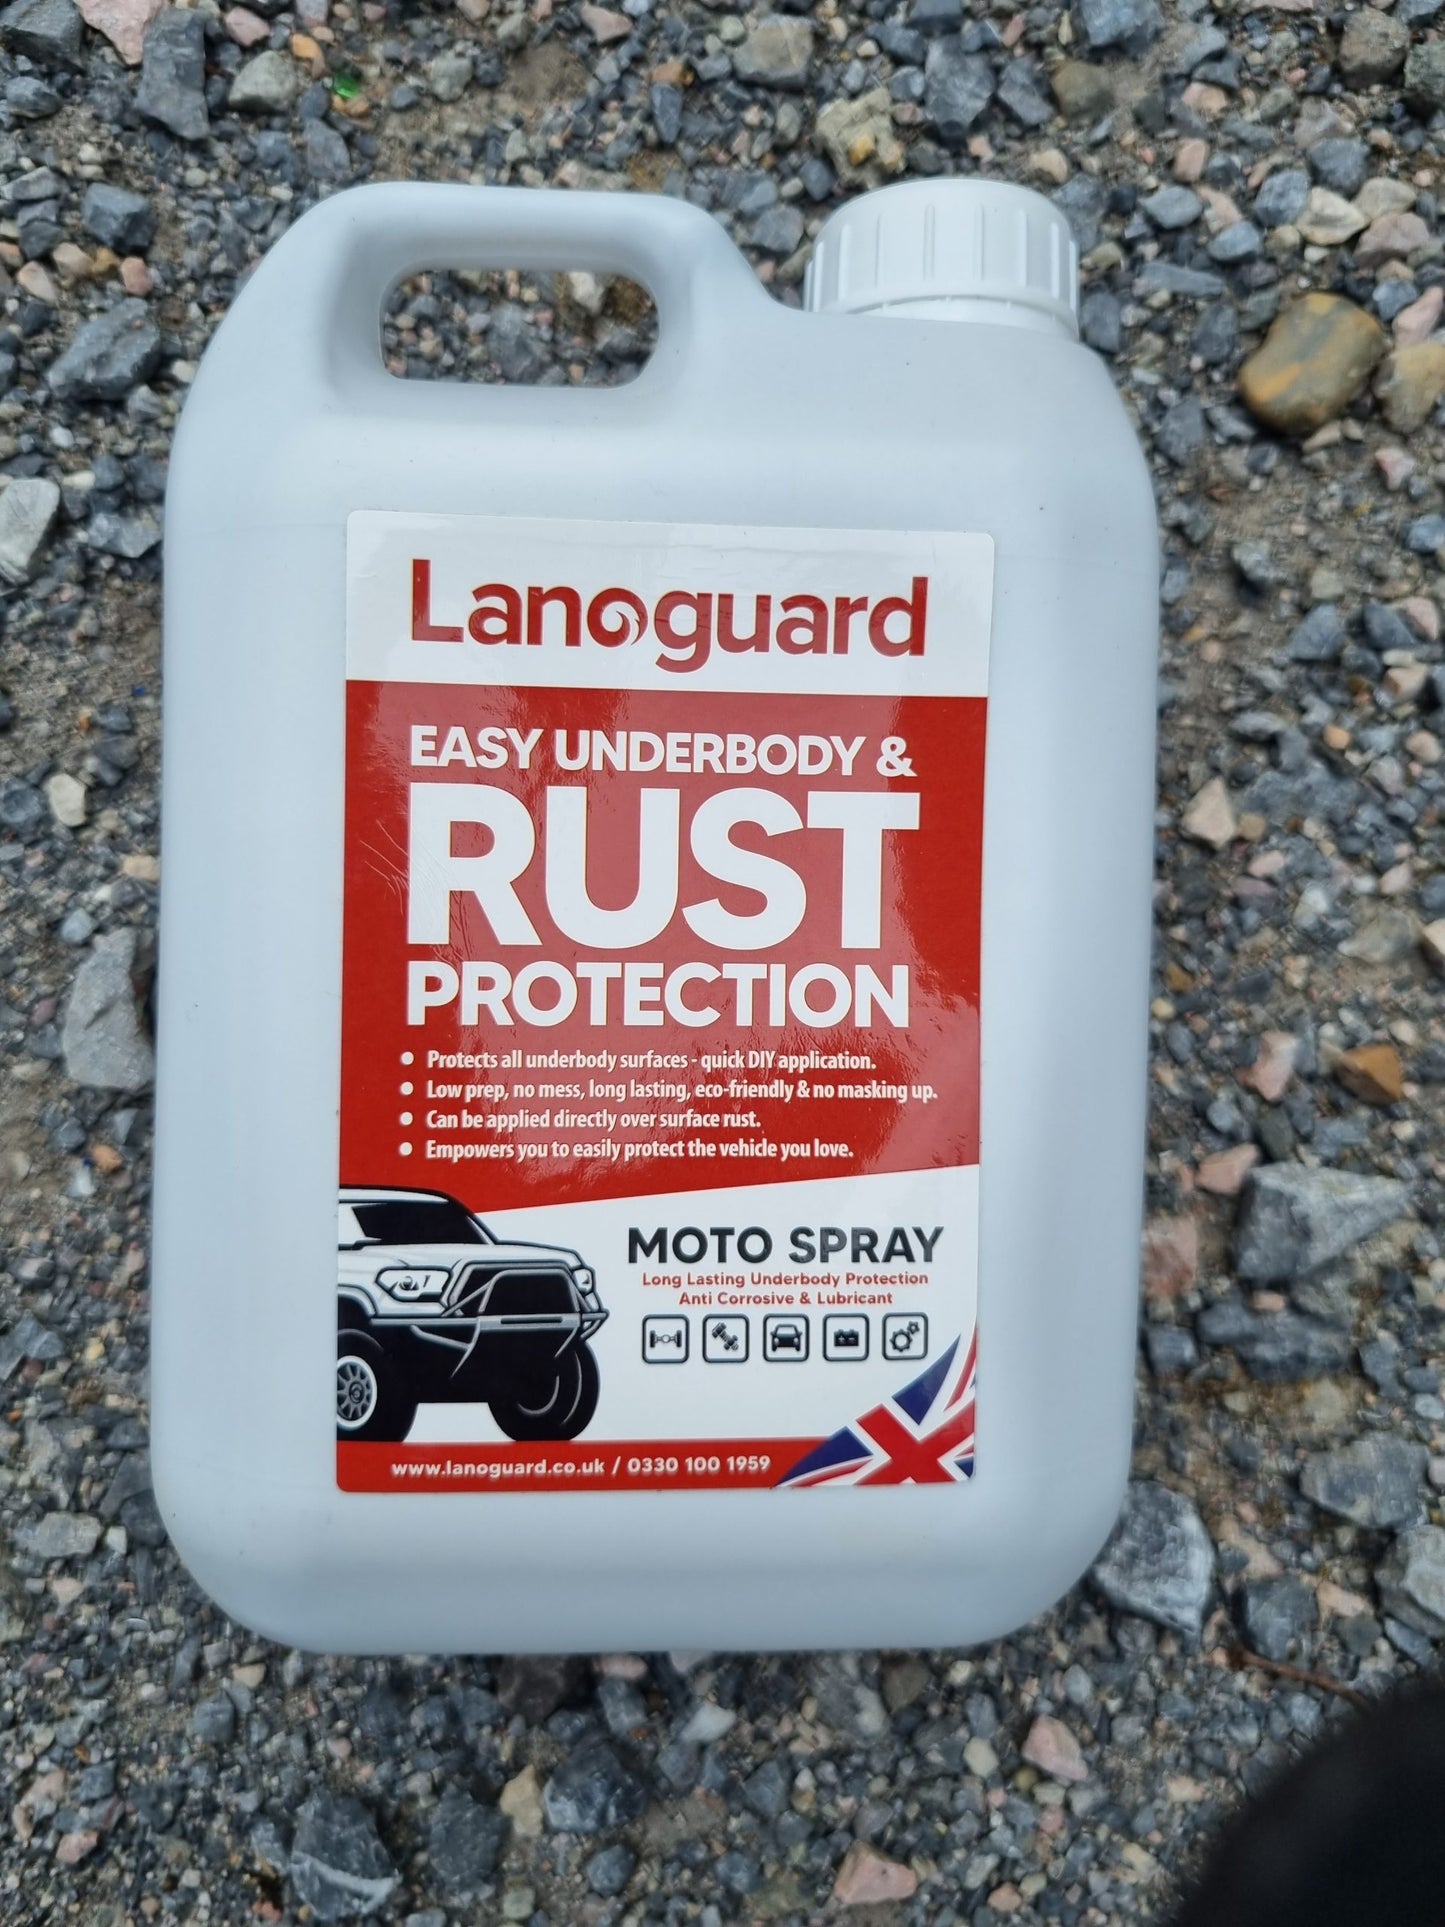 Lanoguard 2 litre moto spray refill without trigger sprayer